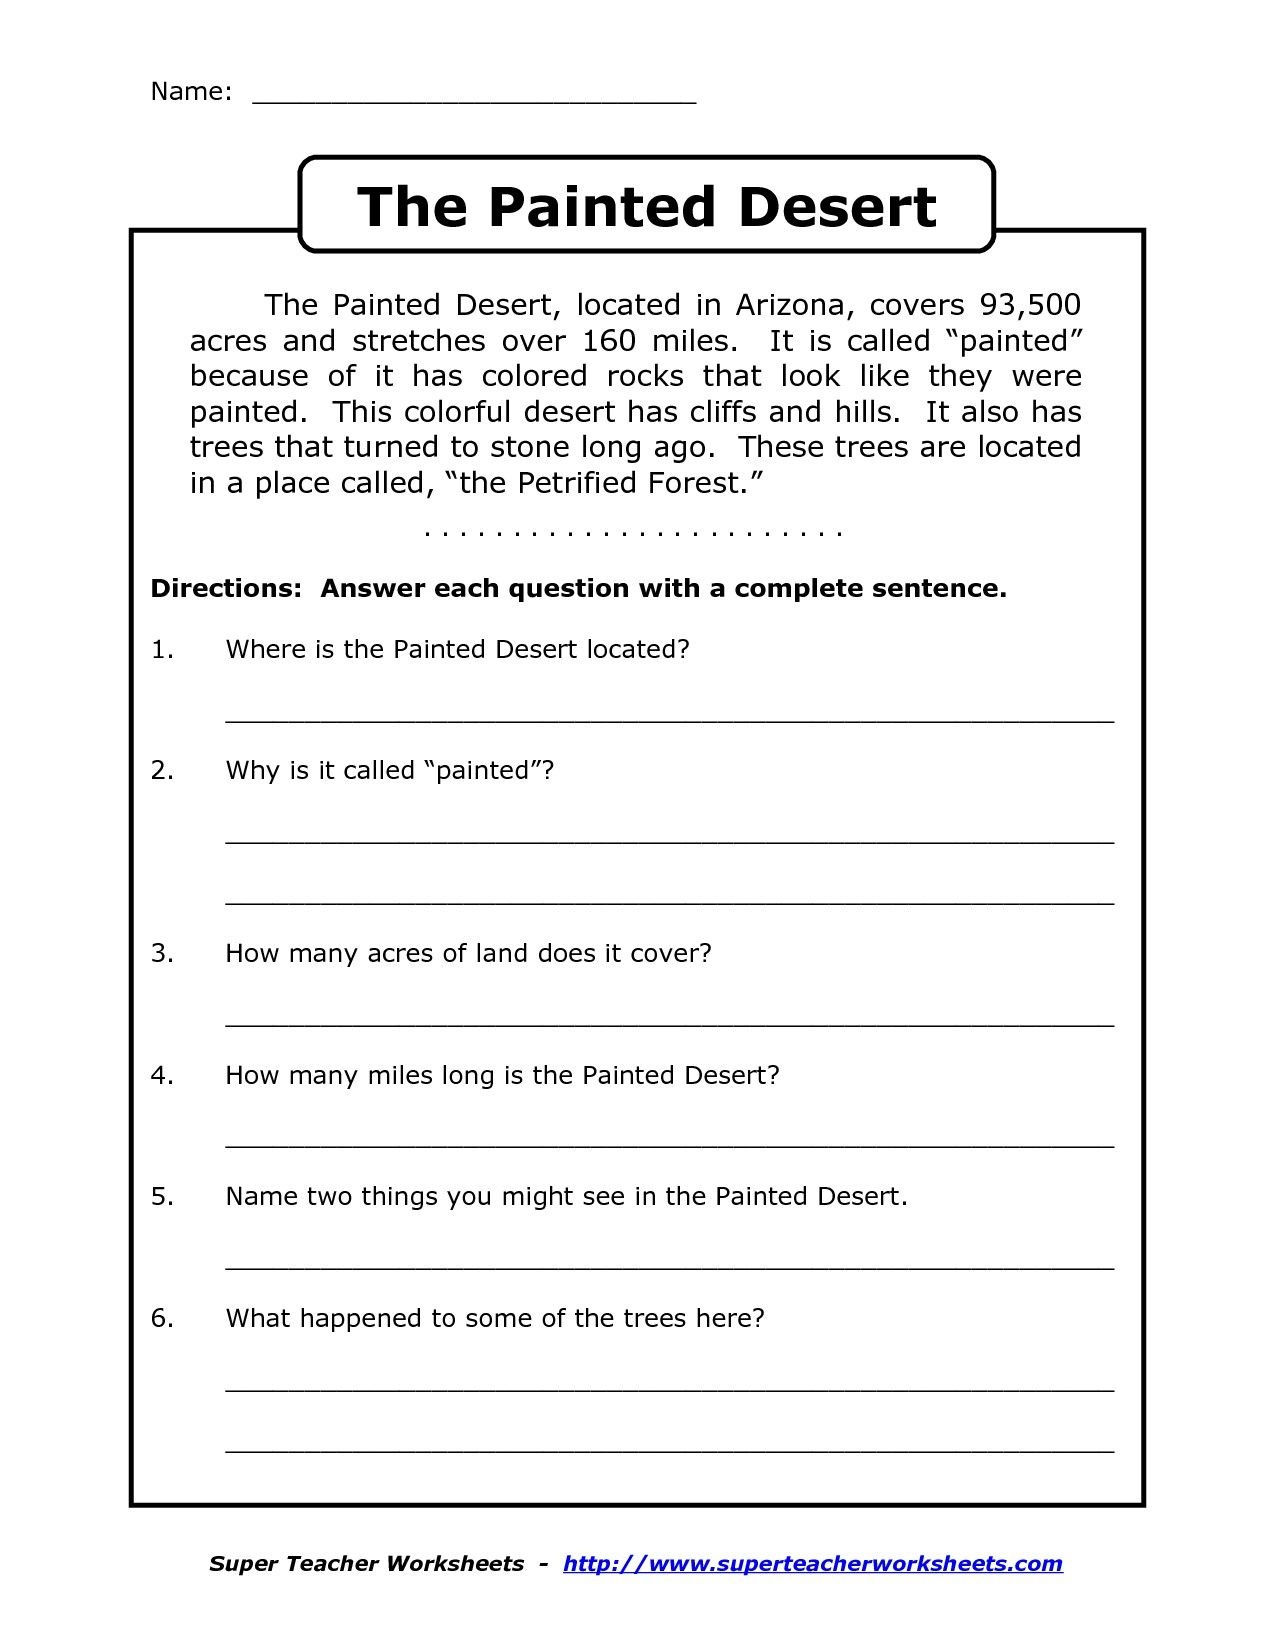 Image Result For Free Printable Worksheets For Grade 4 Comprehension - Free Printable English Comprehension Worksheets For Grade 4